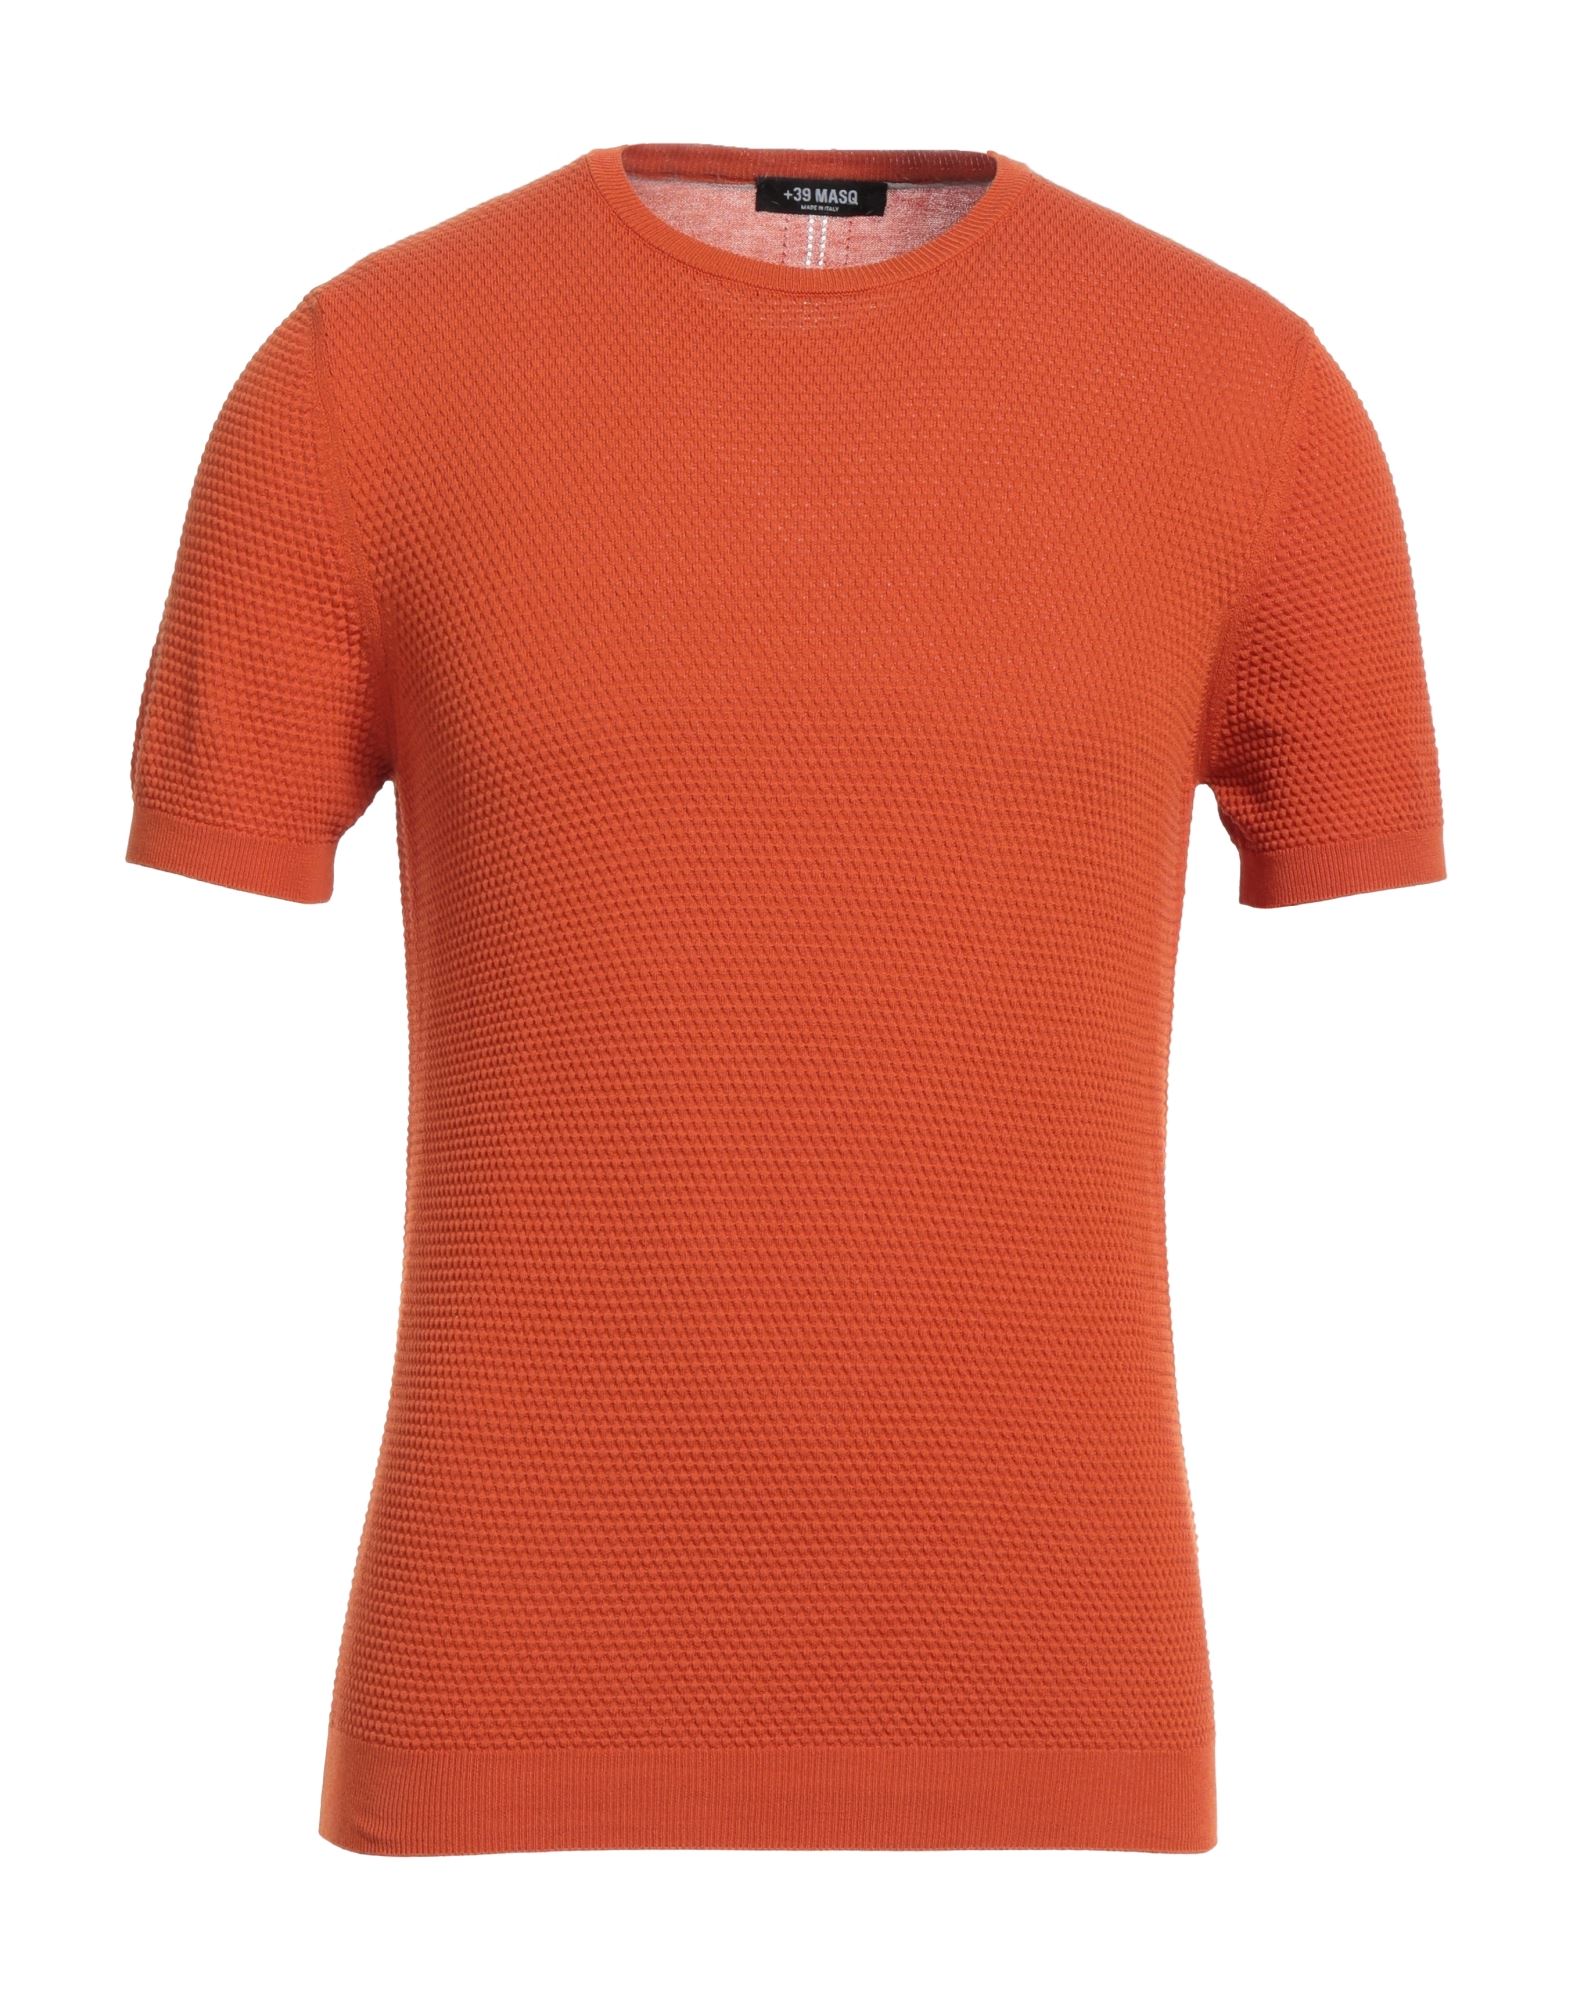 +39 Masq Man Sweater Orange Size M Cotton